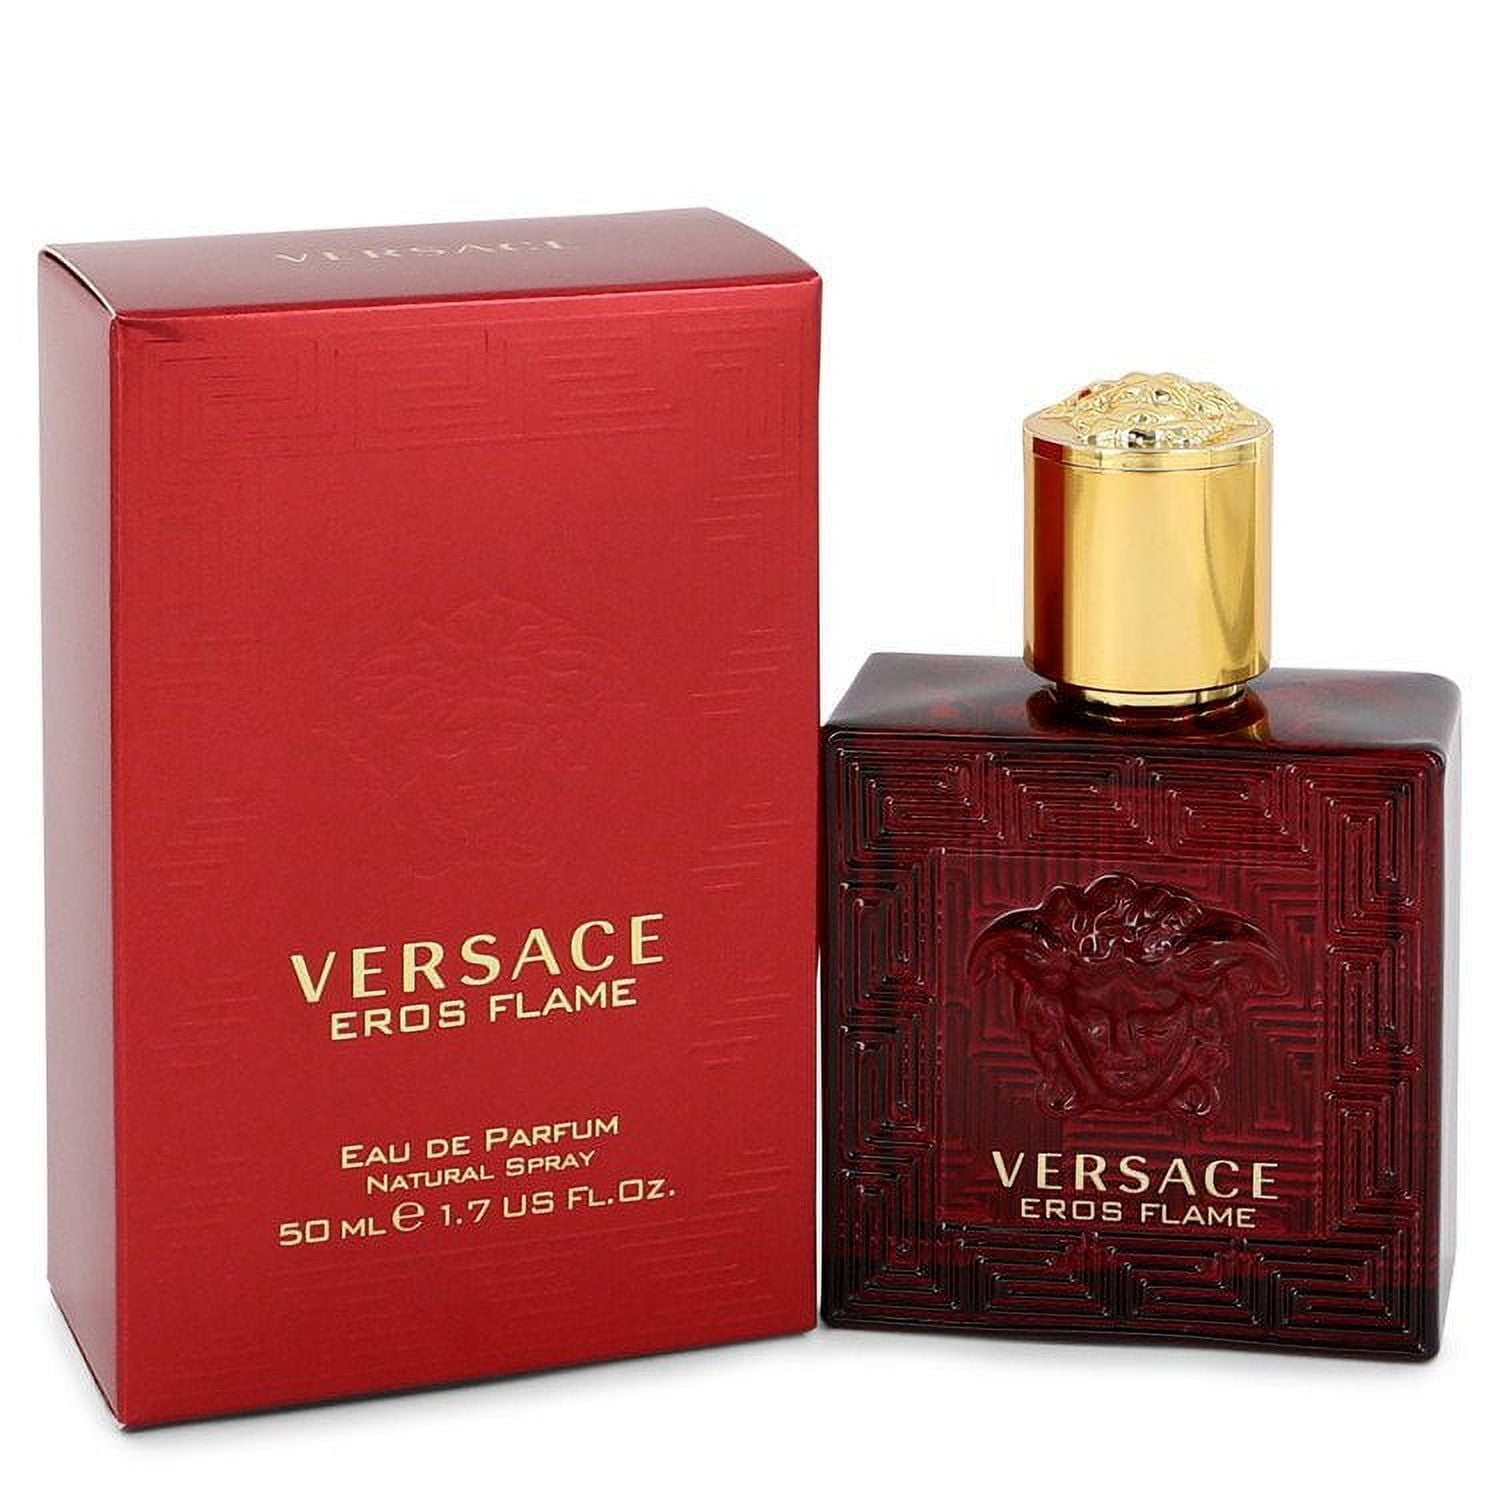 Versace Eros Flame by Versace Eau De Parfum Spray 1.7 oz For Men ...